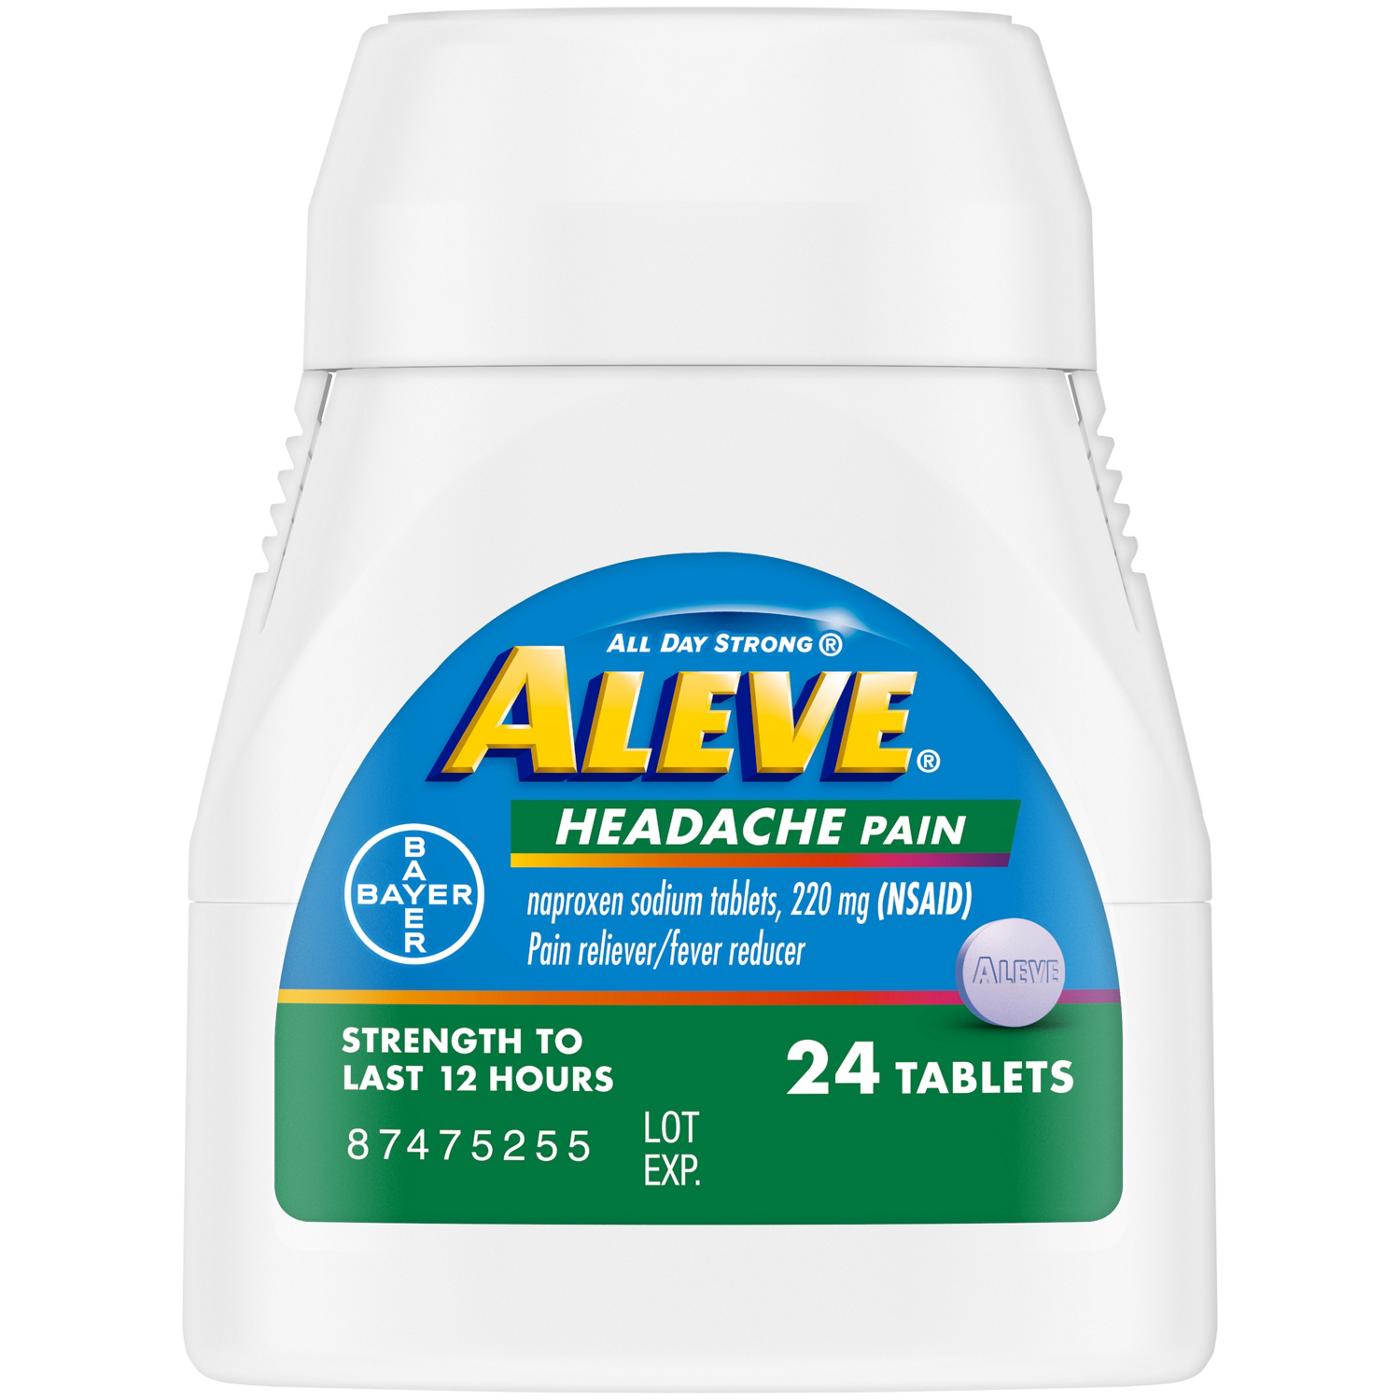 Aleve Headache Pain Tablets; image 4 of 5